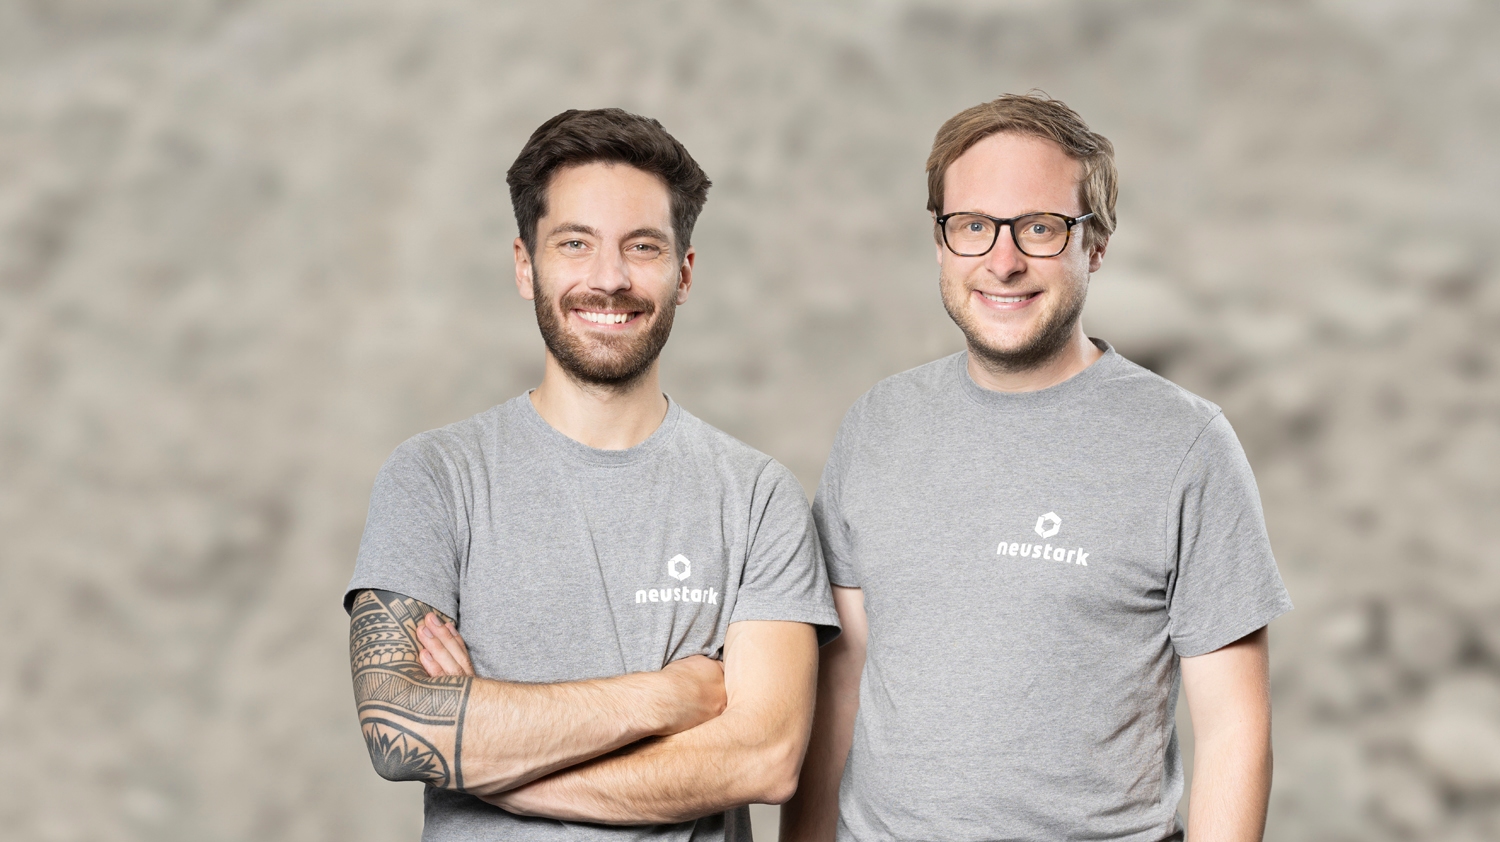 Neustark_Co-CEOs-and-founders_Johannes-Tiefenthaler_Valentin-Gutknecht